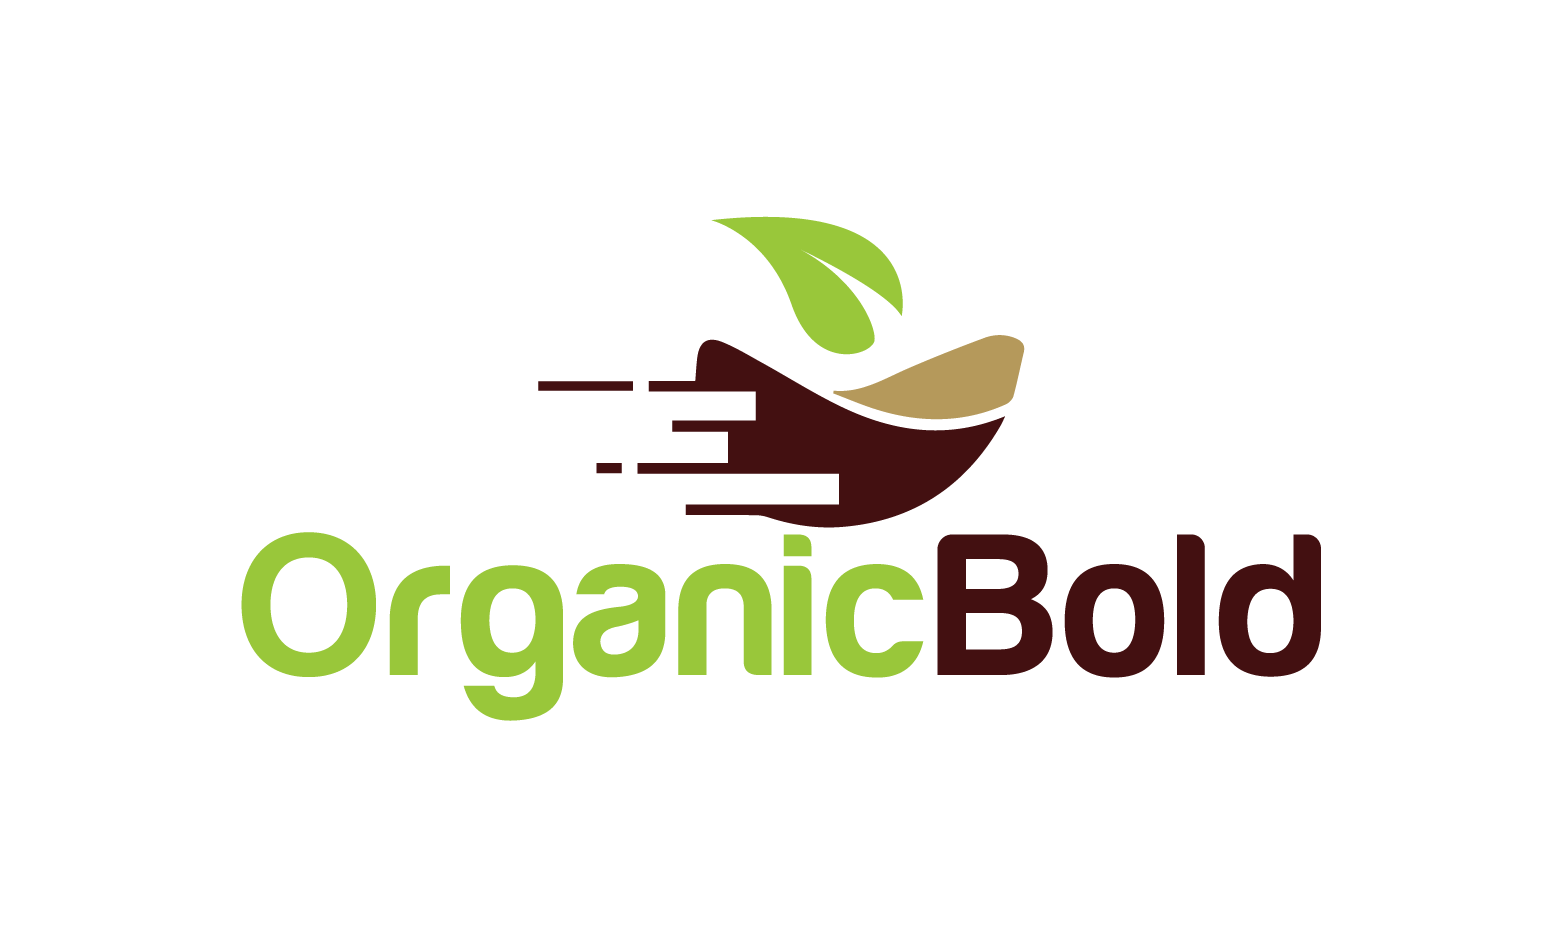 OrganicBold.com - Creative brandable domain for sale